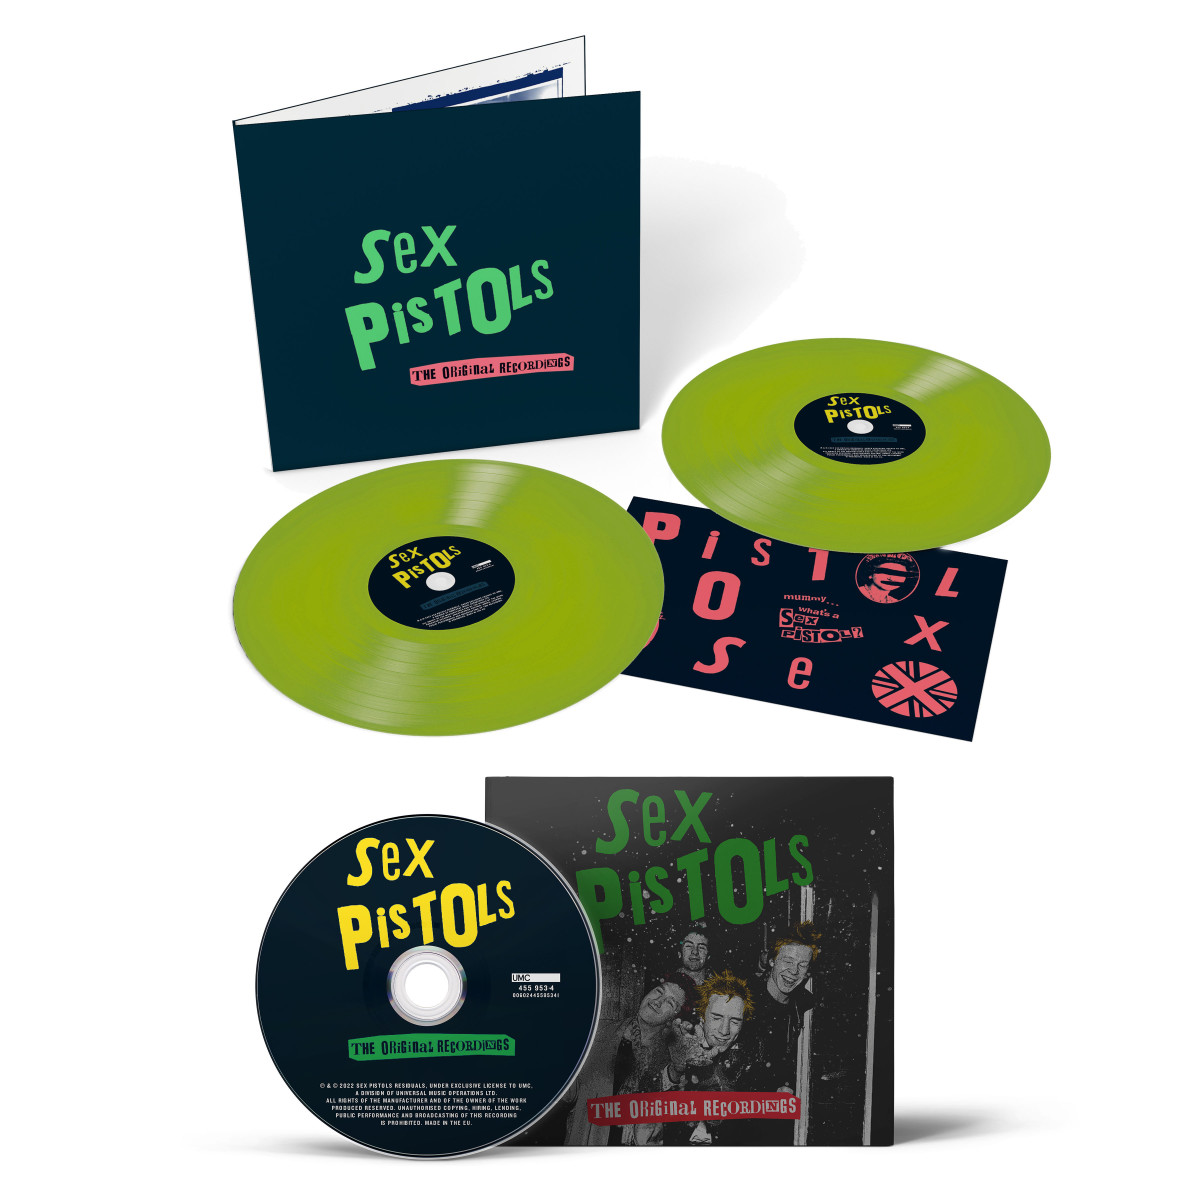 Sex Pistols Original Recordings "deluxe'